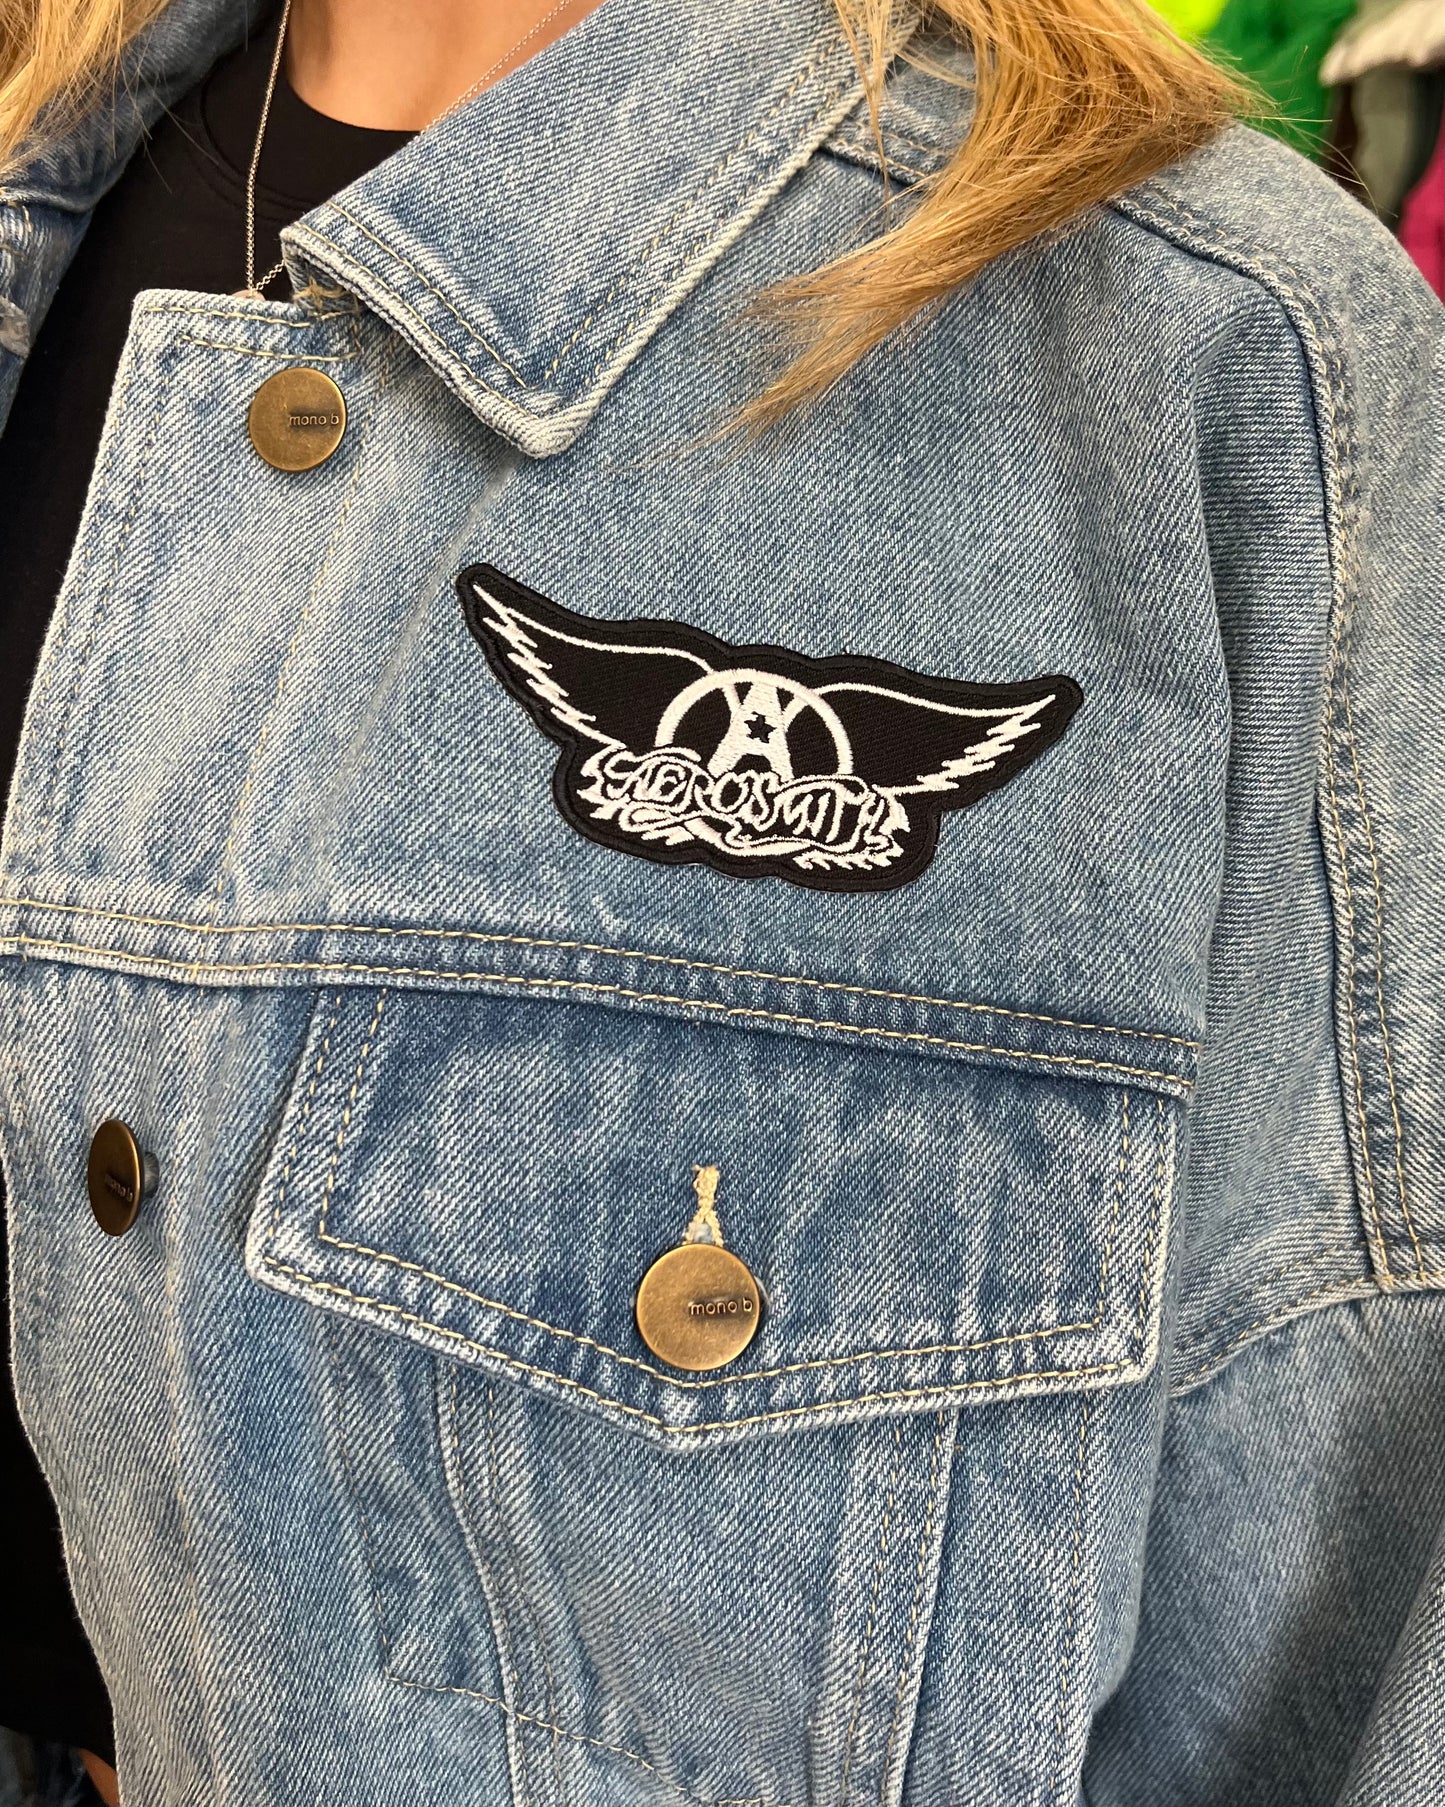 Aerosmith Handmade Denim Patch Jacket